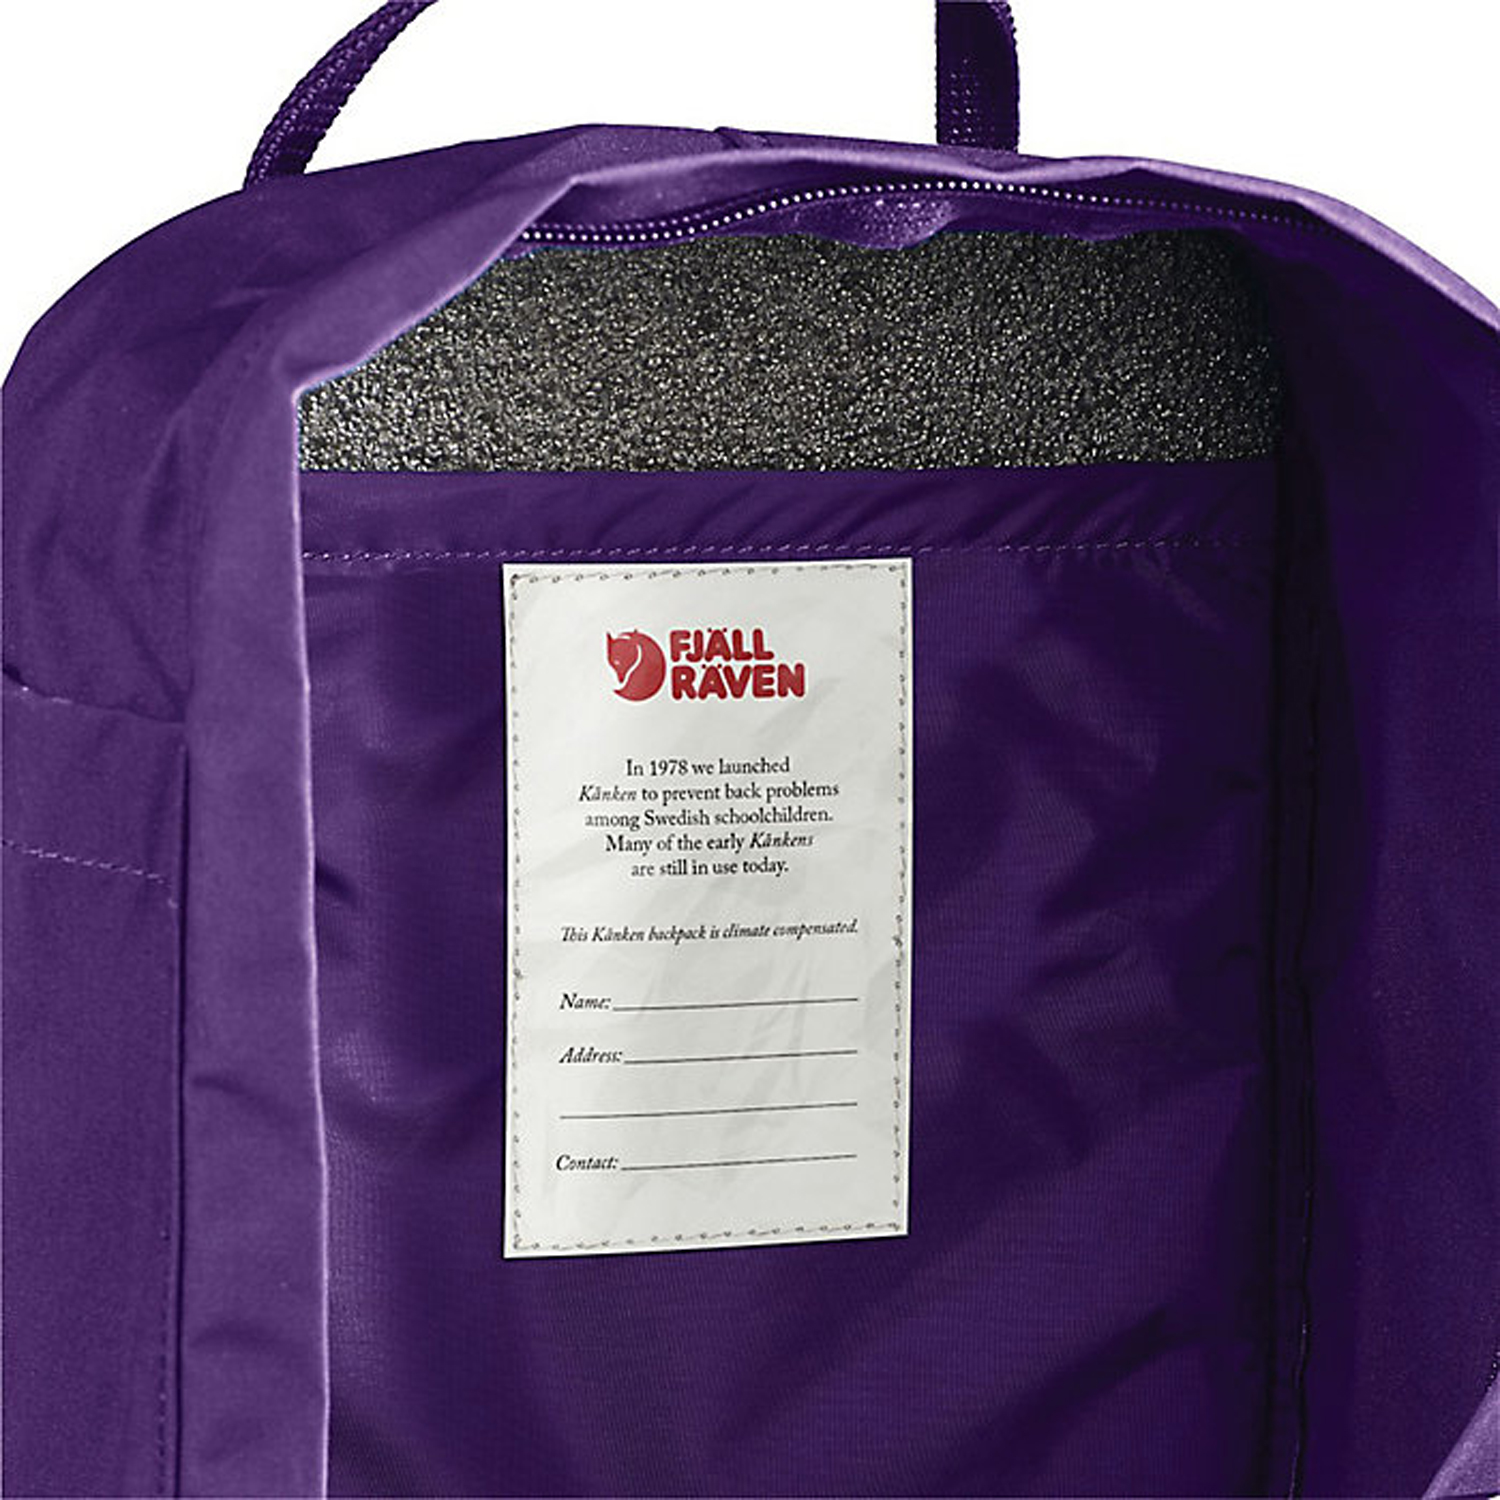 Fjallraven Kanken Mini Backpack Purple